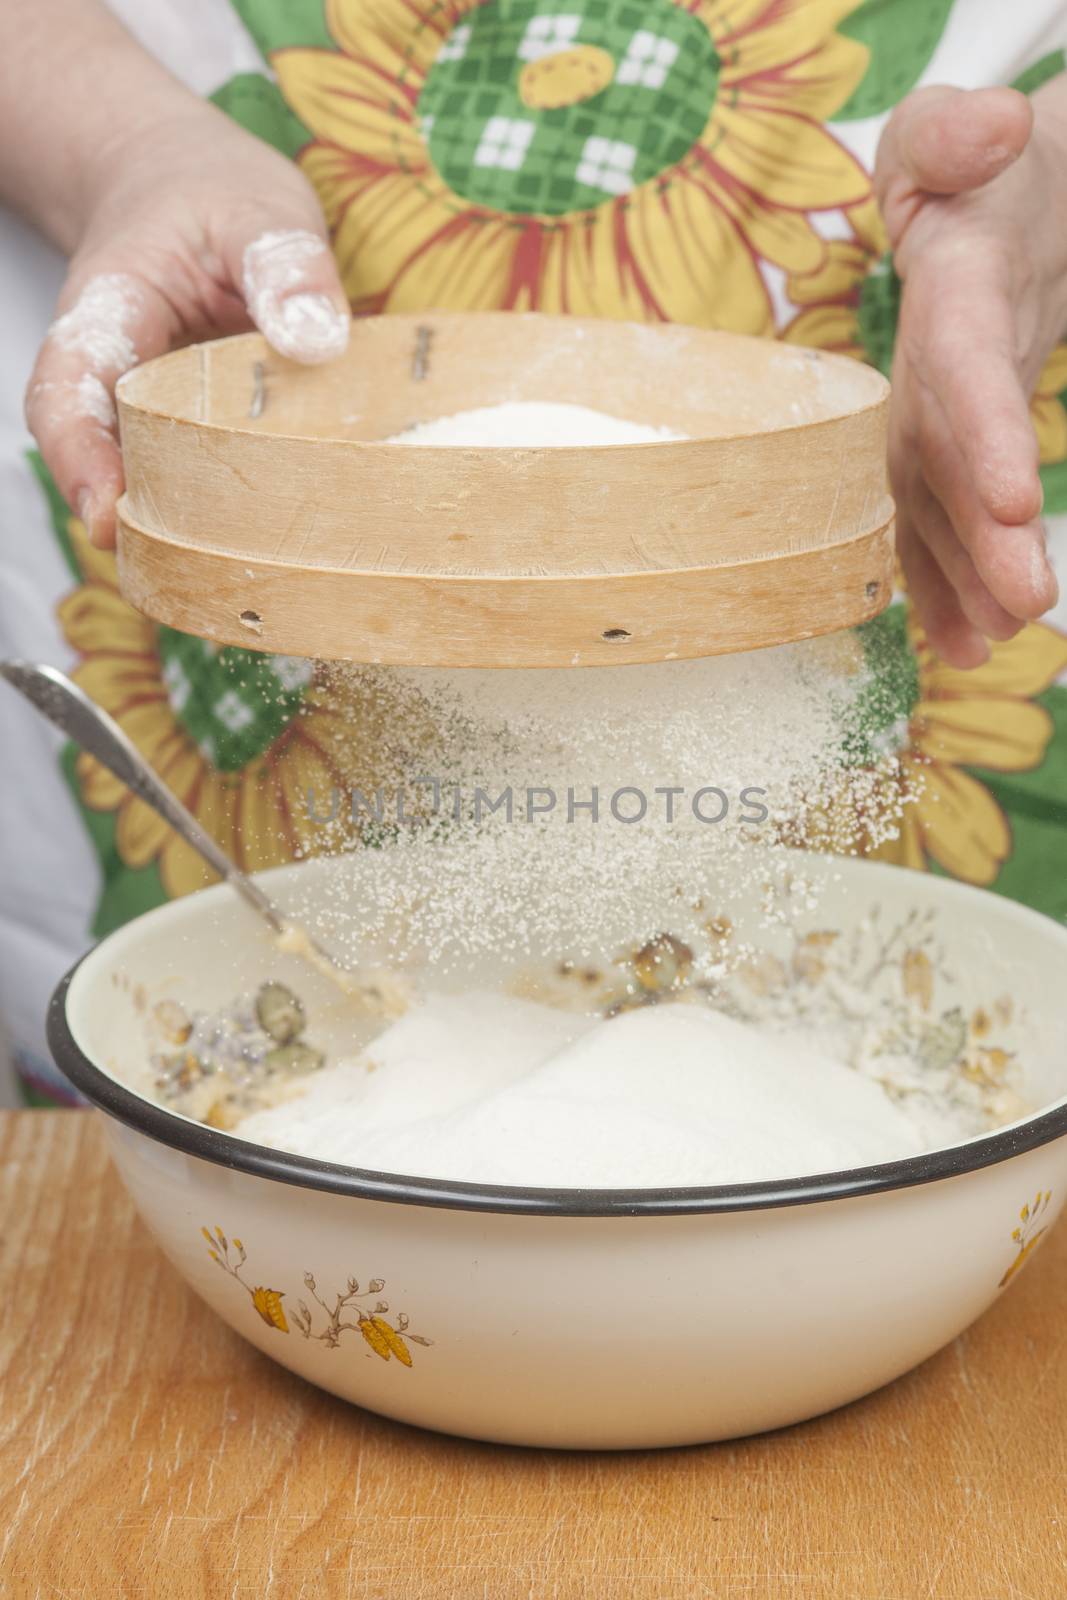 Women's hands preparing flour before baking pie.